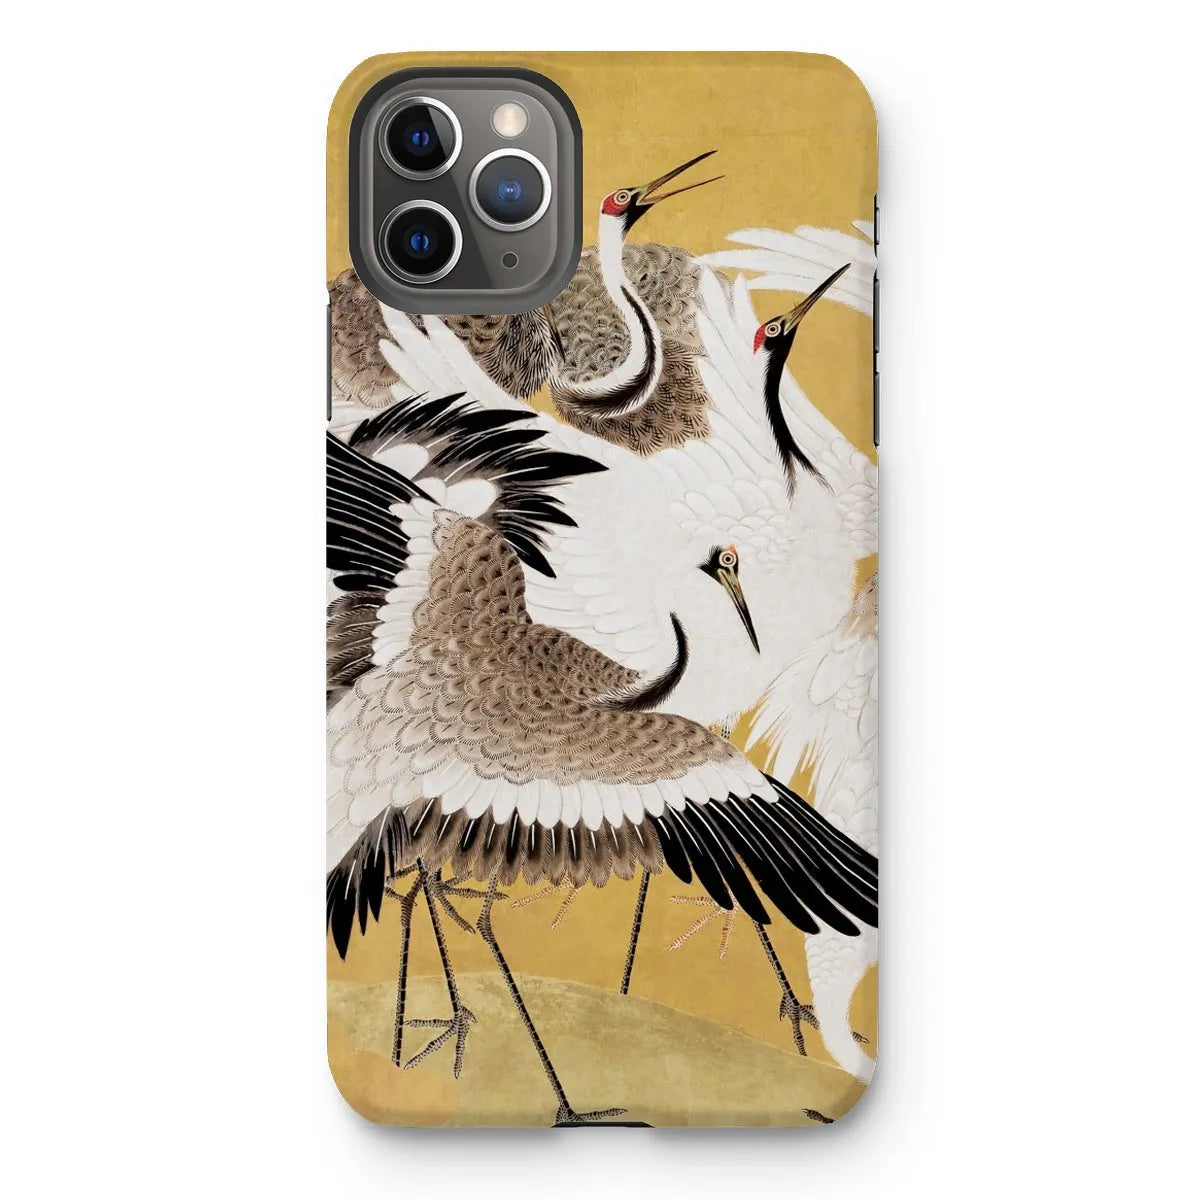 Flock Of Cranes Japanese Bird Art Phone Case - Ishida Yūtei - Iphone 11 Pro Max / Matte - Mobile Phone Cases